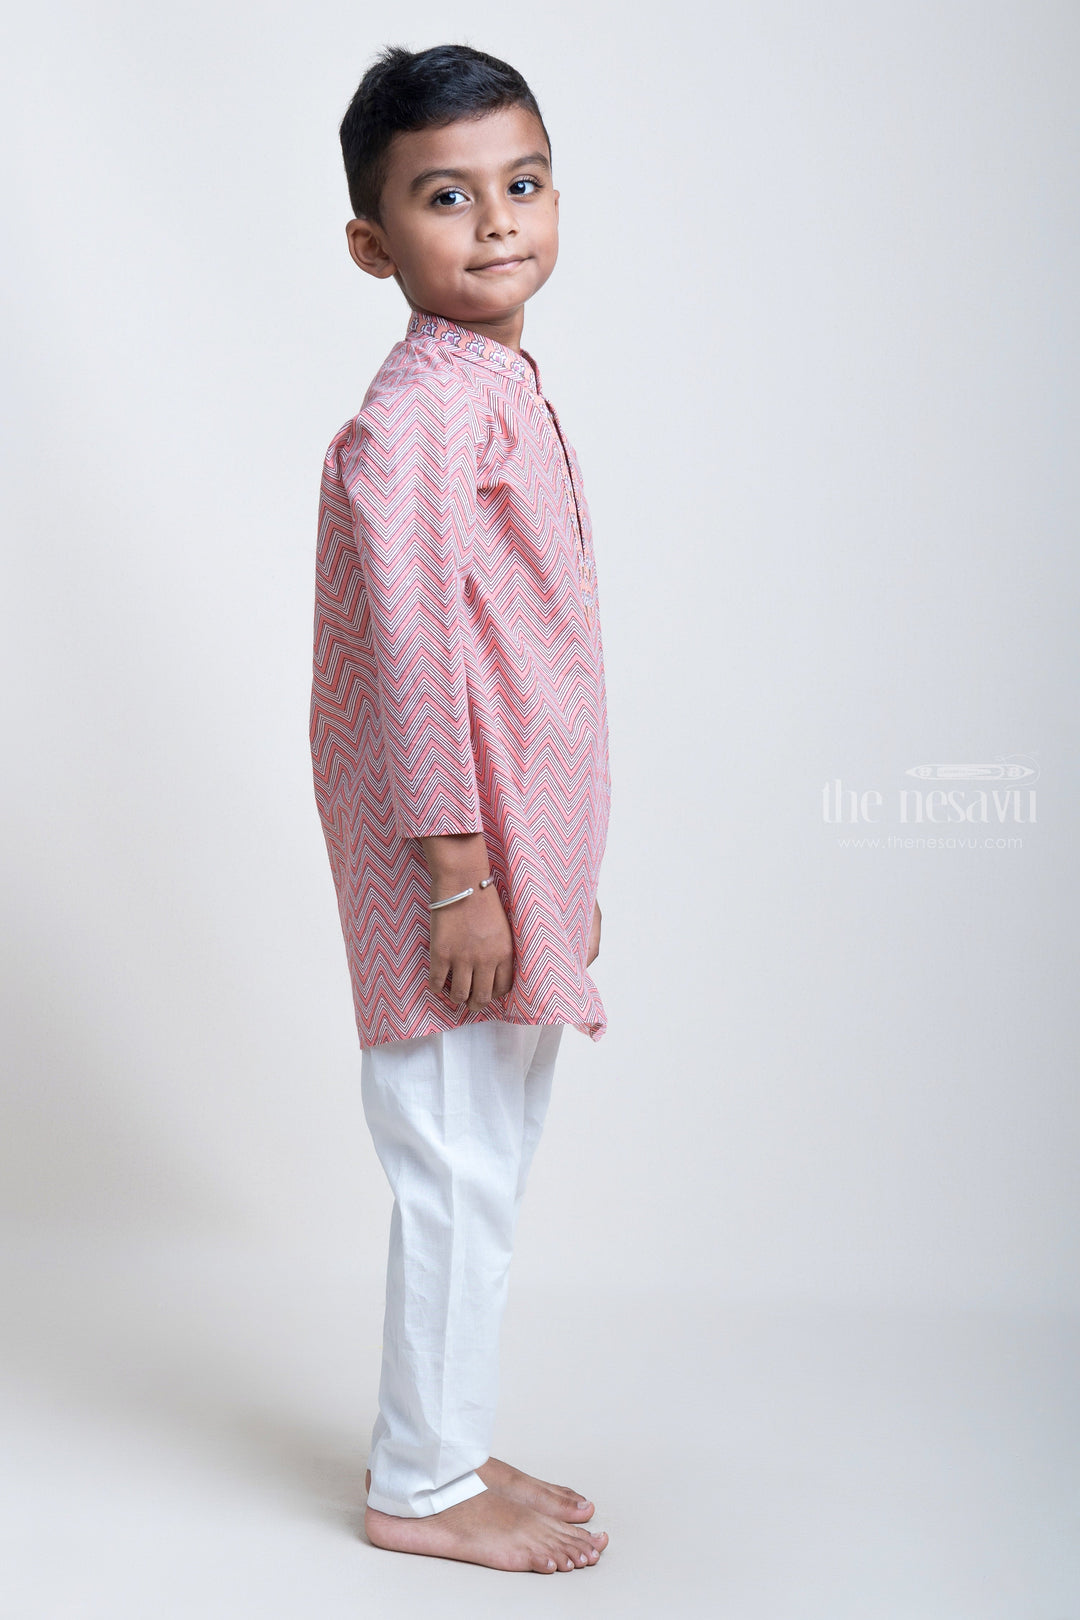 The Nesavu Boys Kurtha Set Ajrak Printed ZigZag Pink Cotton Kurta And White Pyjama For Little Boys psr silks Nesavu